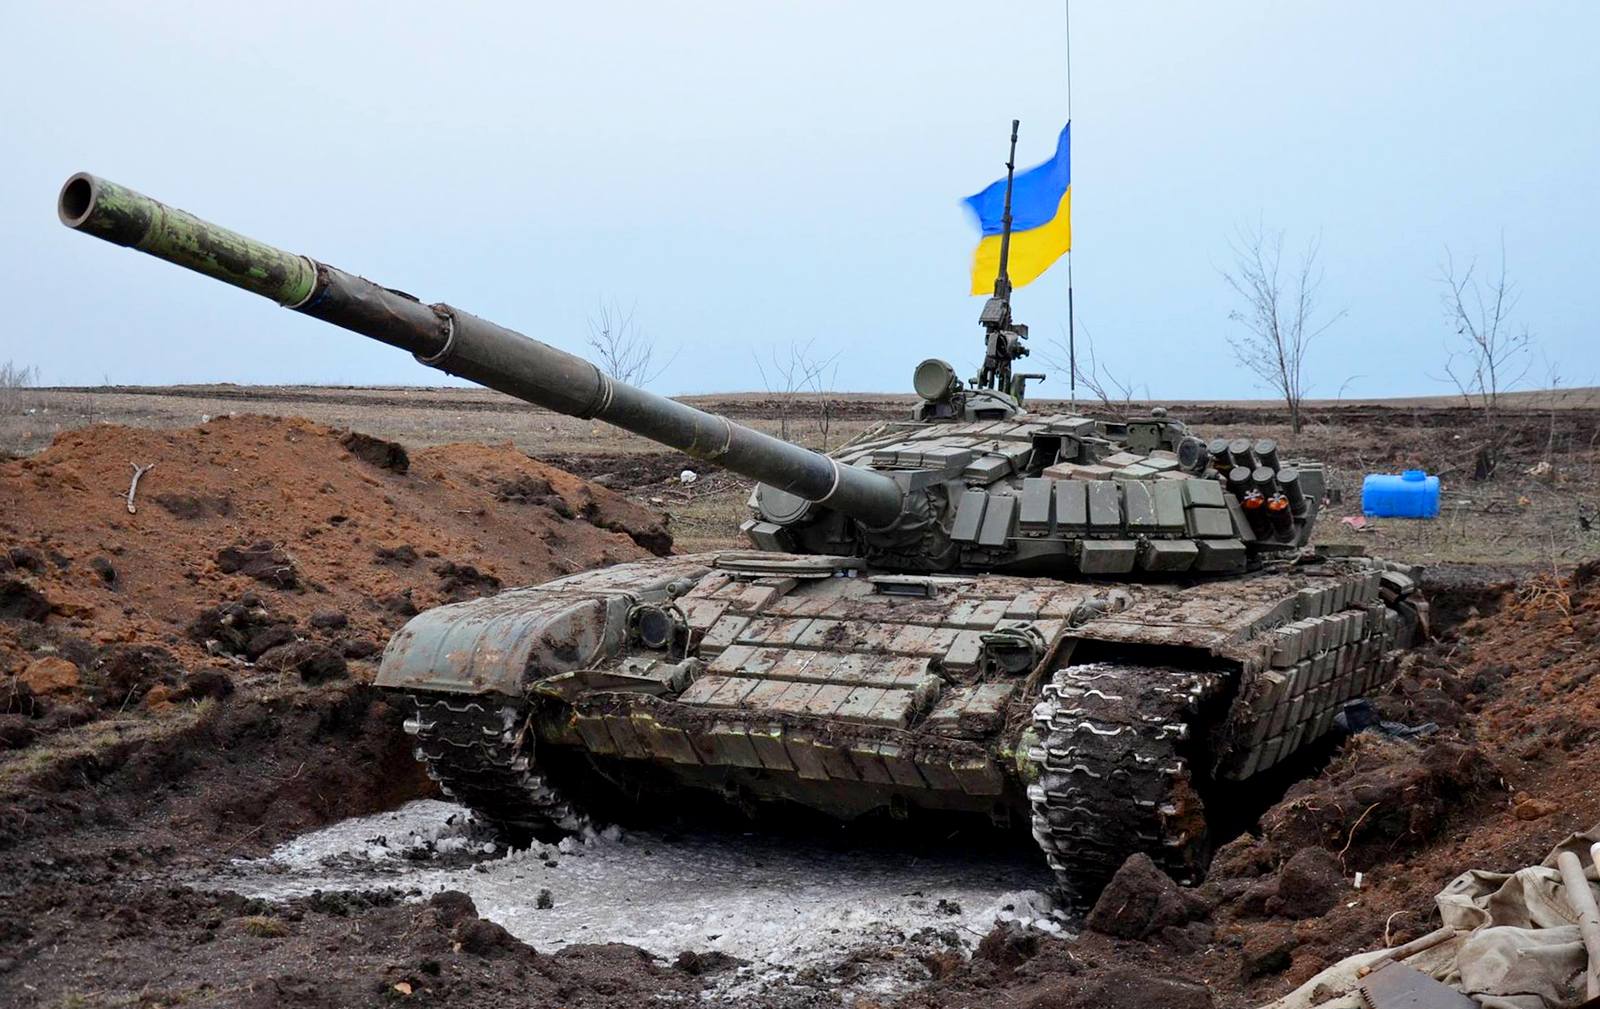 Bίντεο: Τα ουκρανικά άρματα μάχης ανατινάζονται το ένα μετά το άλλο